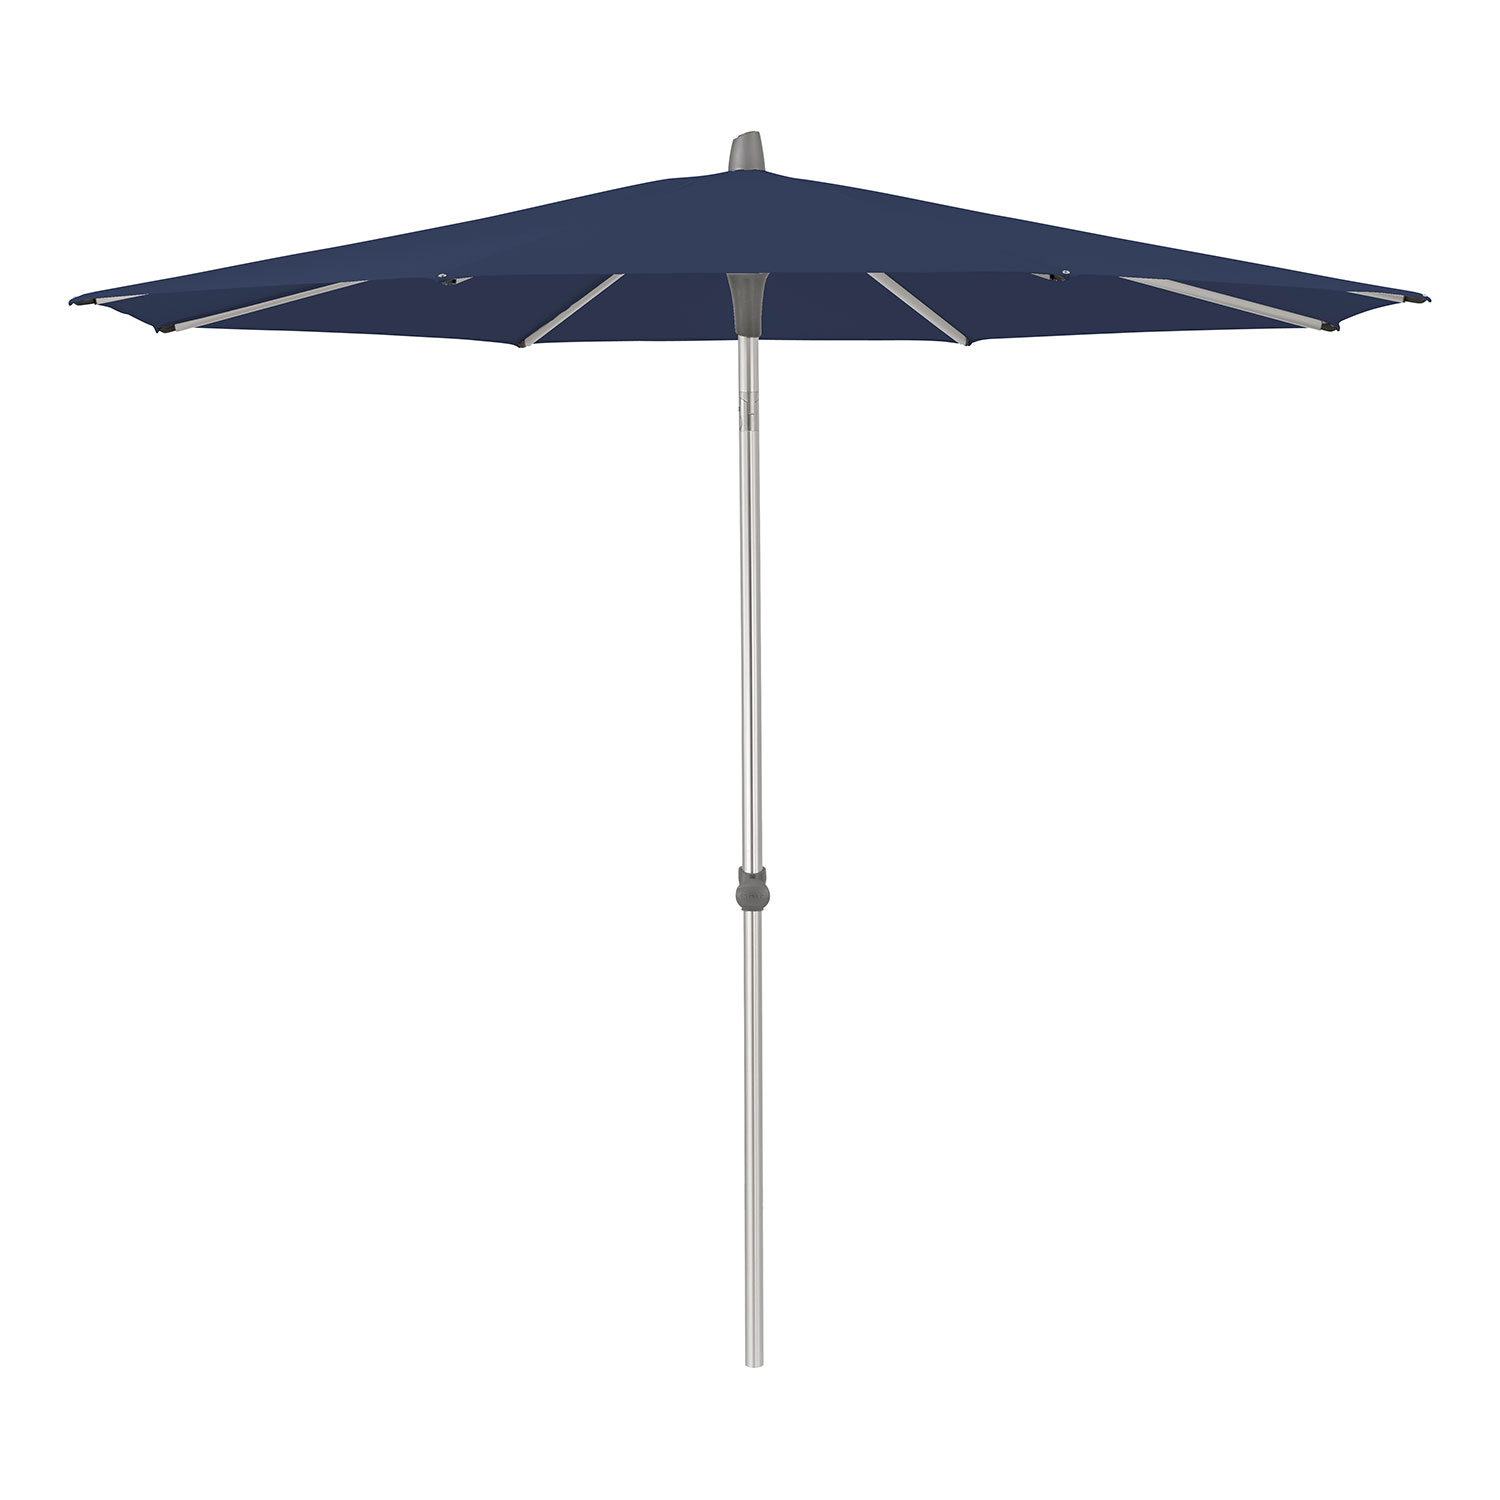 Glatz Alu-smart parasoll 300 cm kat.5 530 atlantic